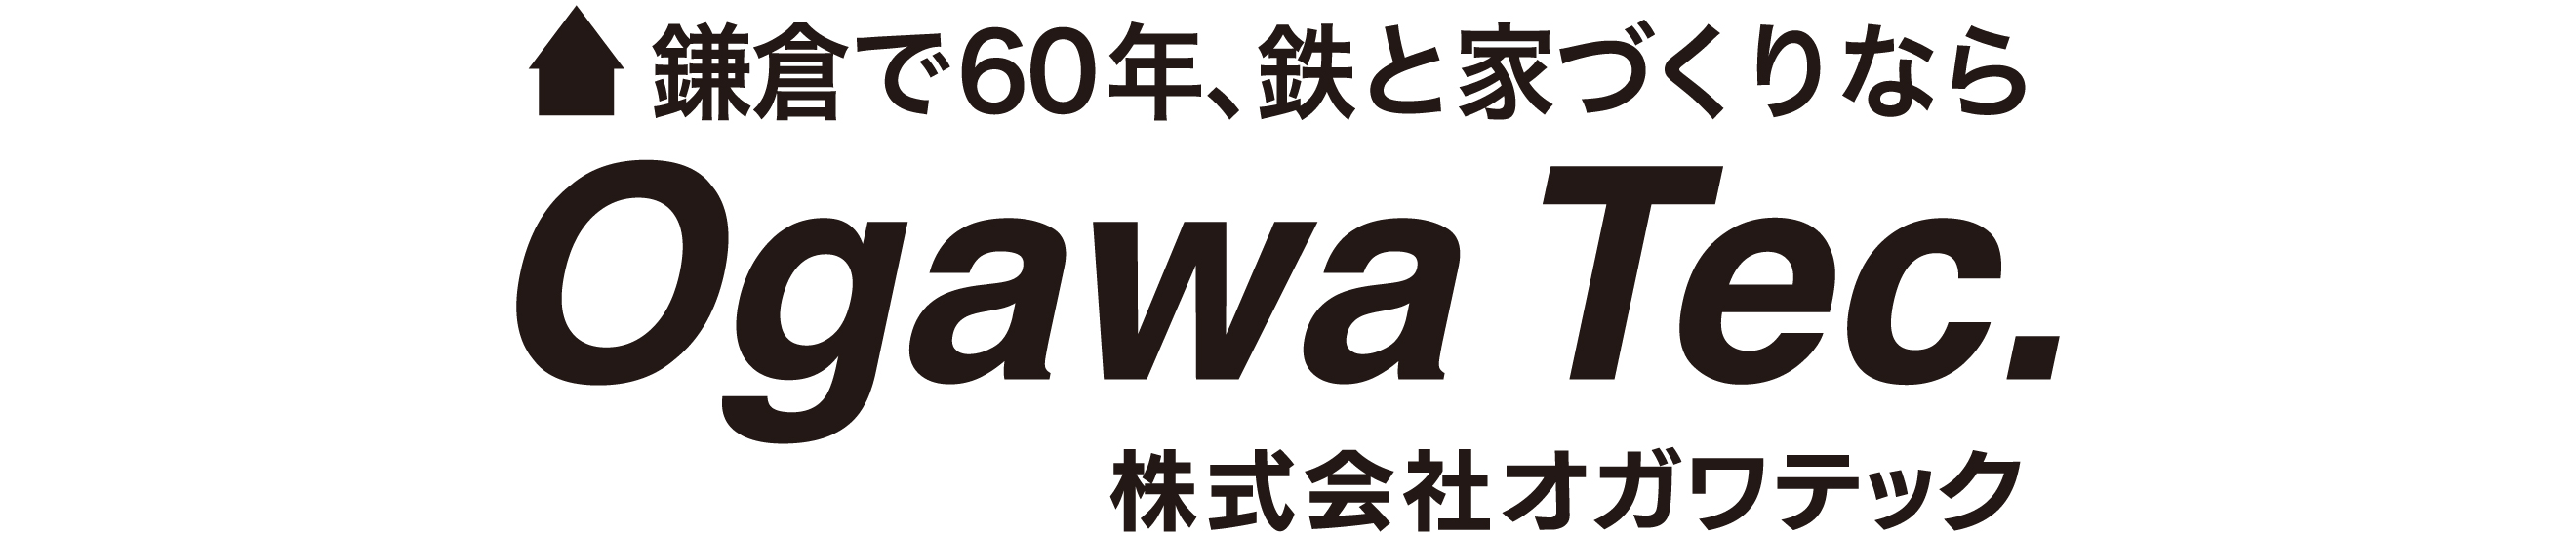 株式会社Ogawa Tec.